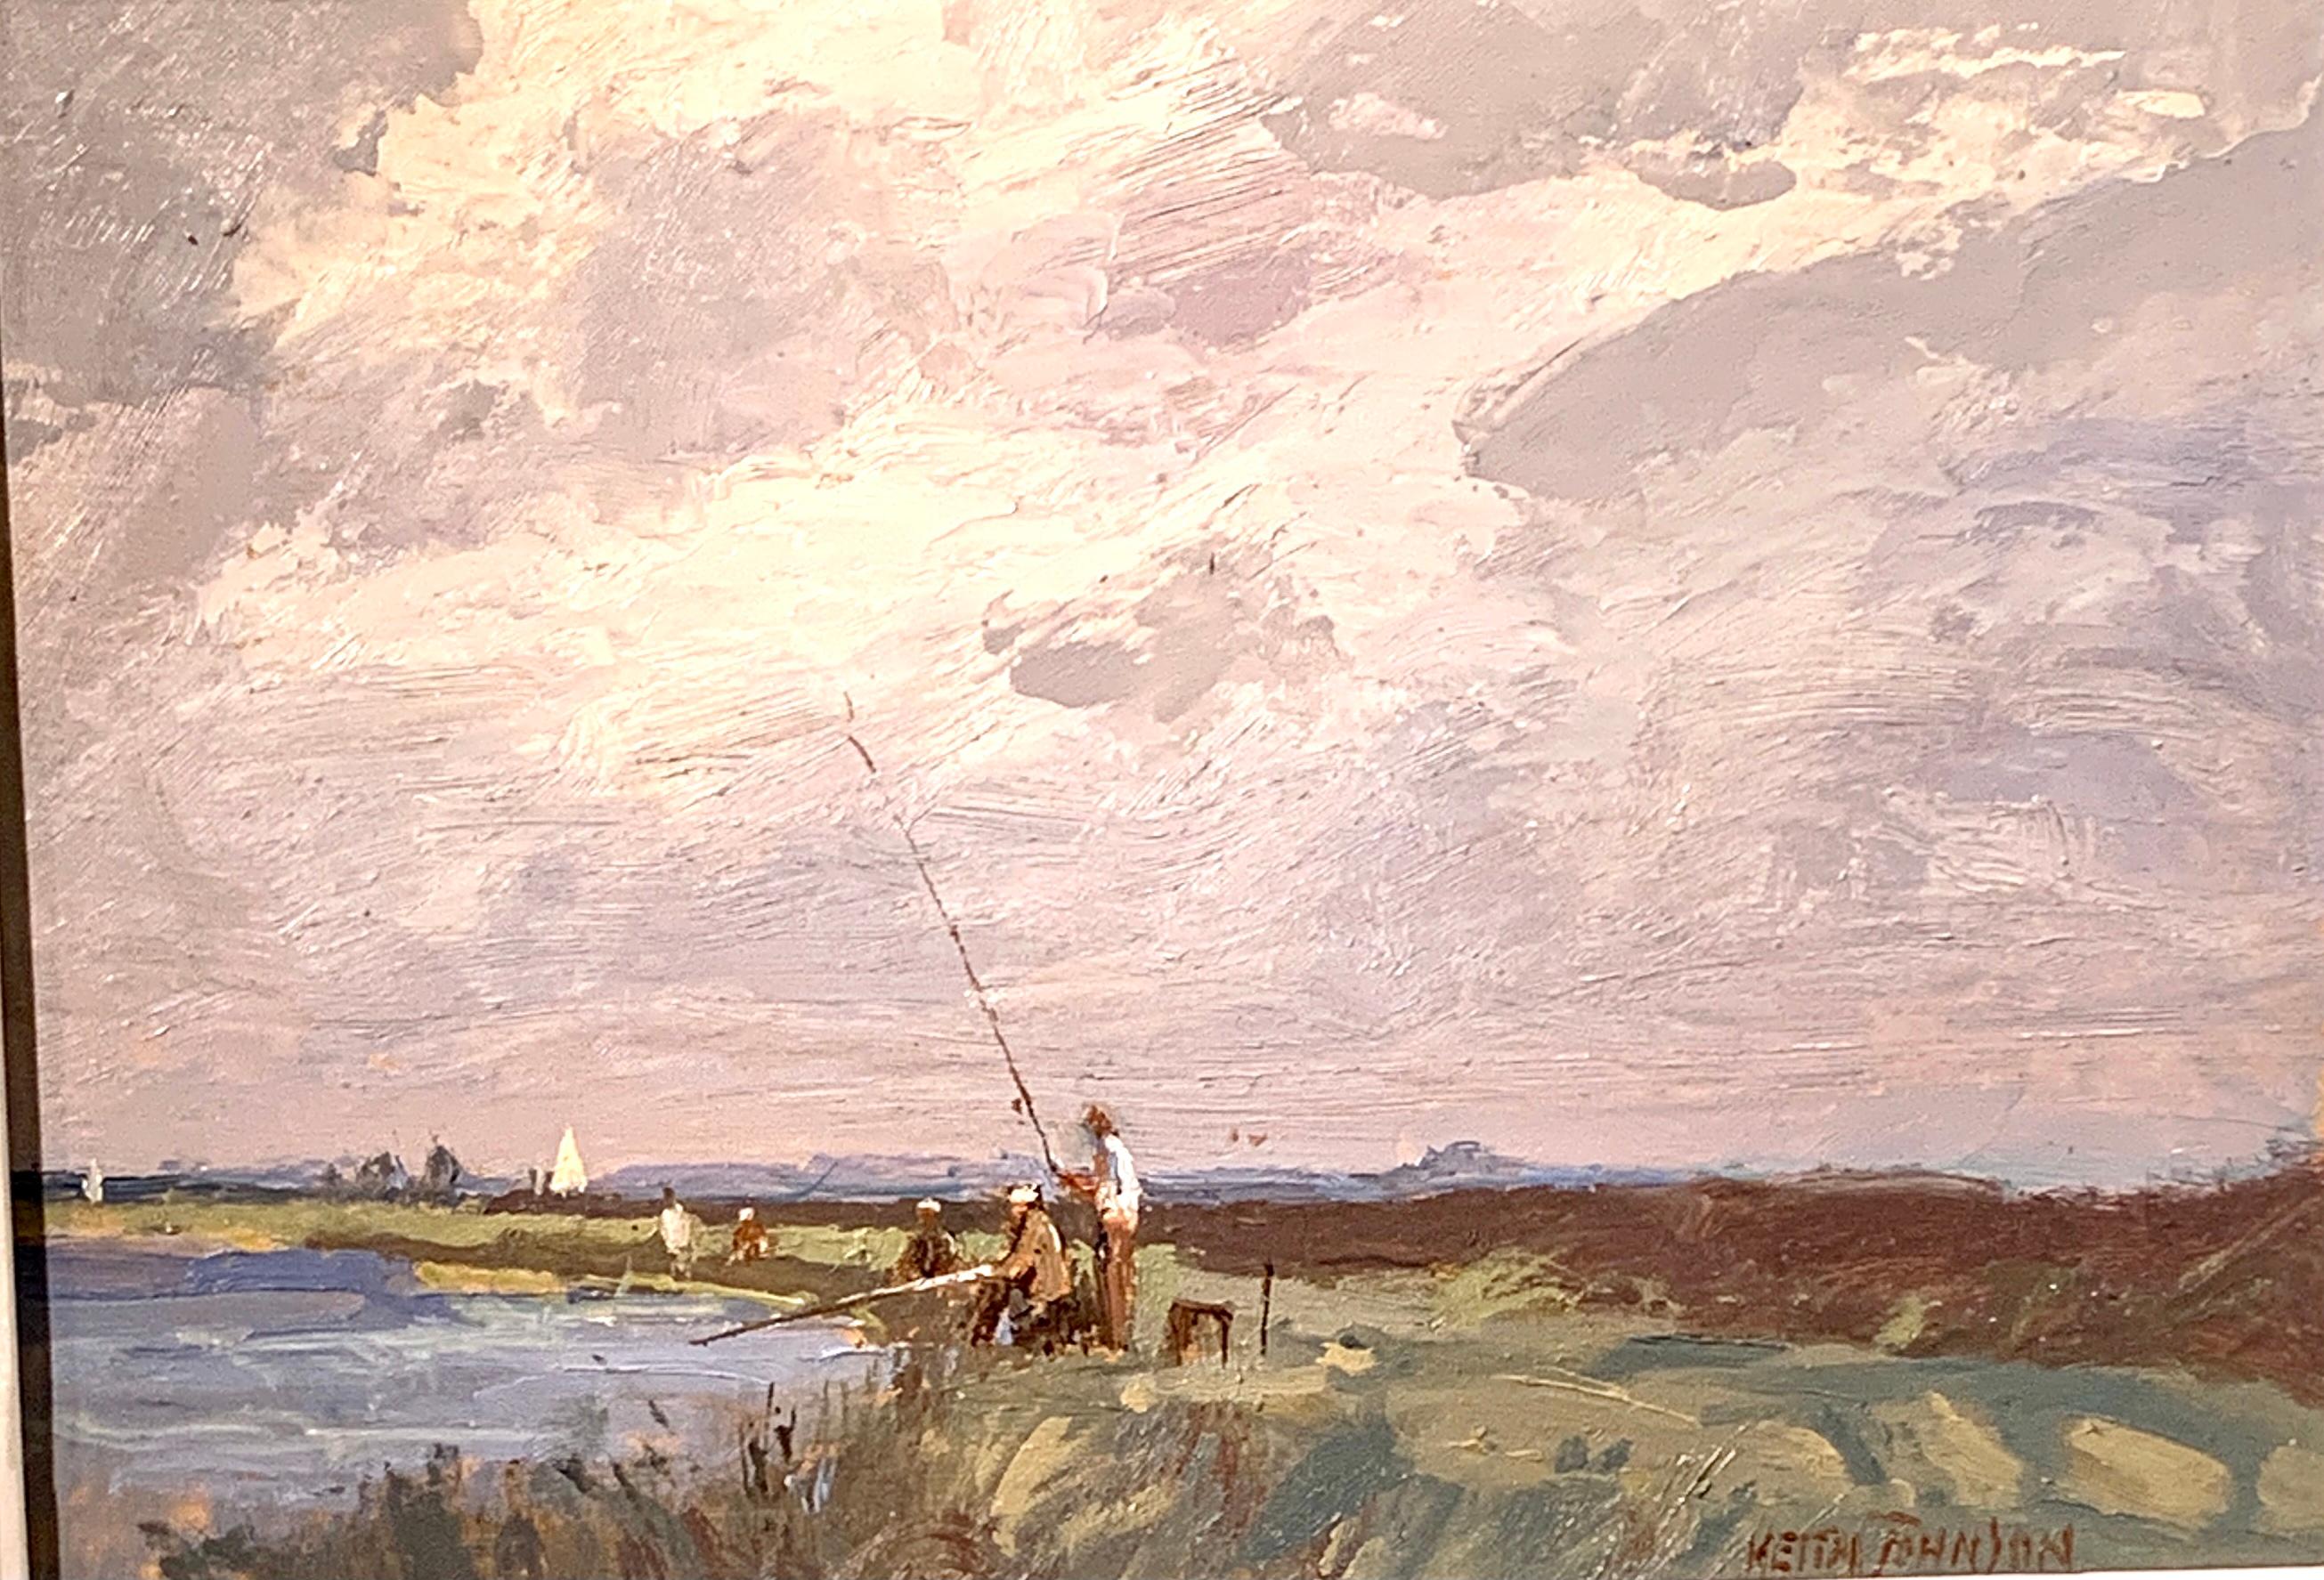 Fisherman impressionniste anglais du 20e siècle pêcheur au Norfolk, Angleterre. - Painting de Keith Johnson